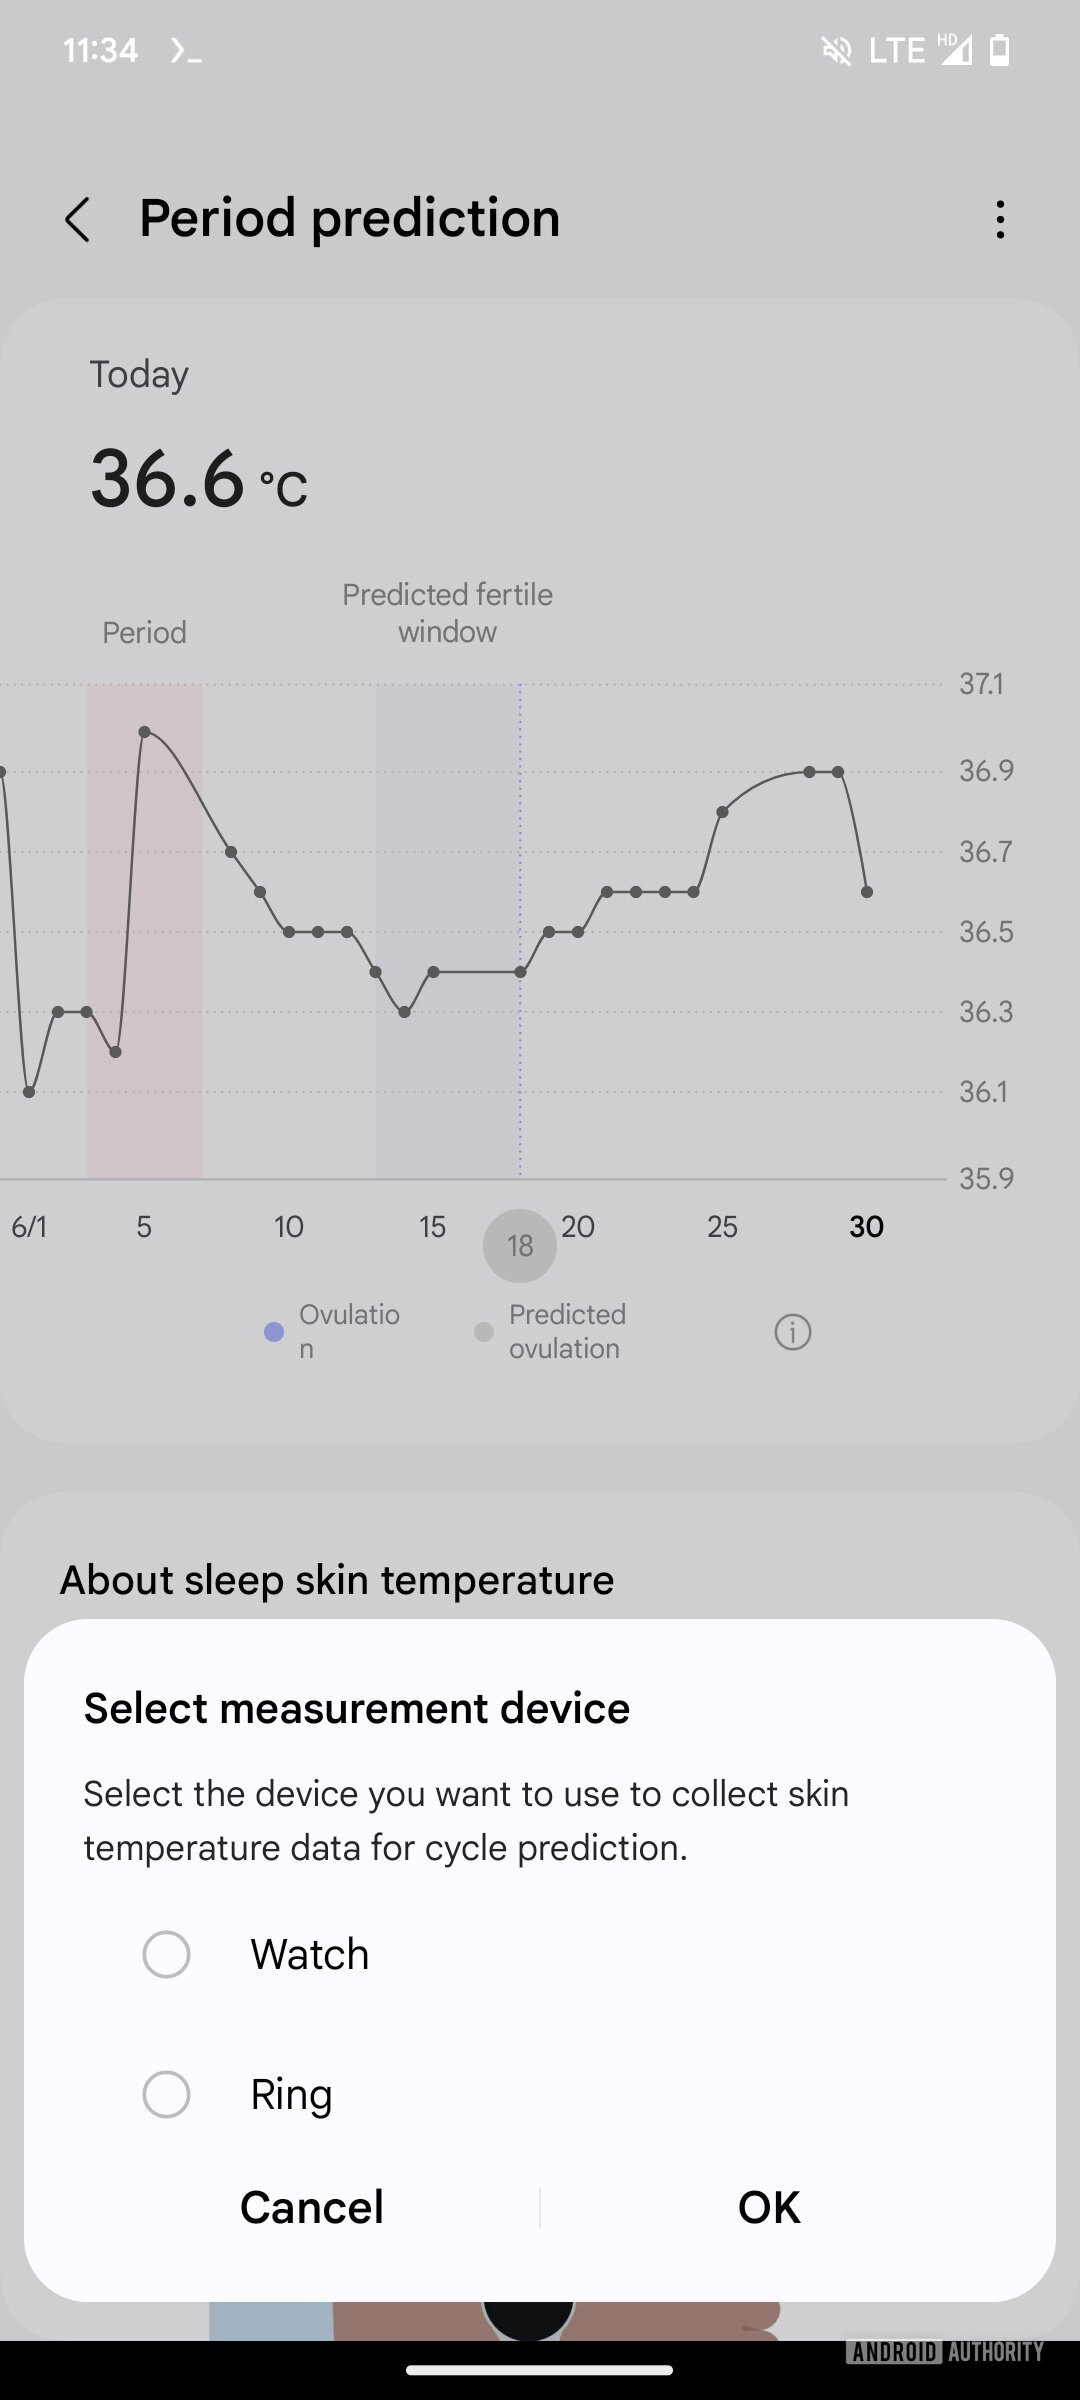 Samsung Health Galaxy Ring skin temperature measure for period prediction